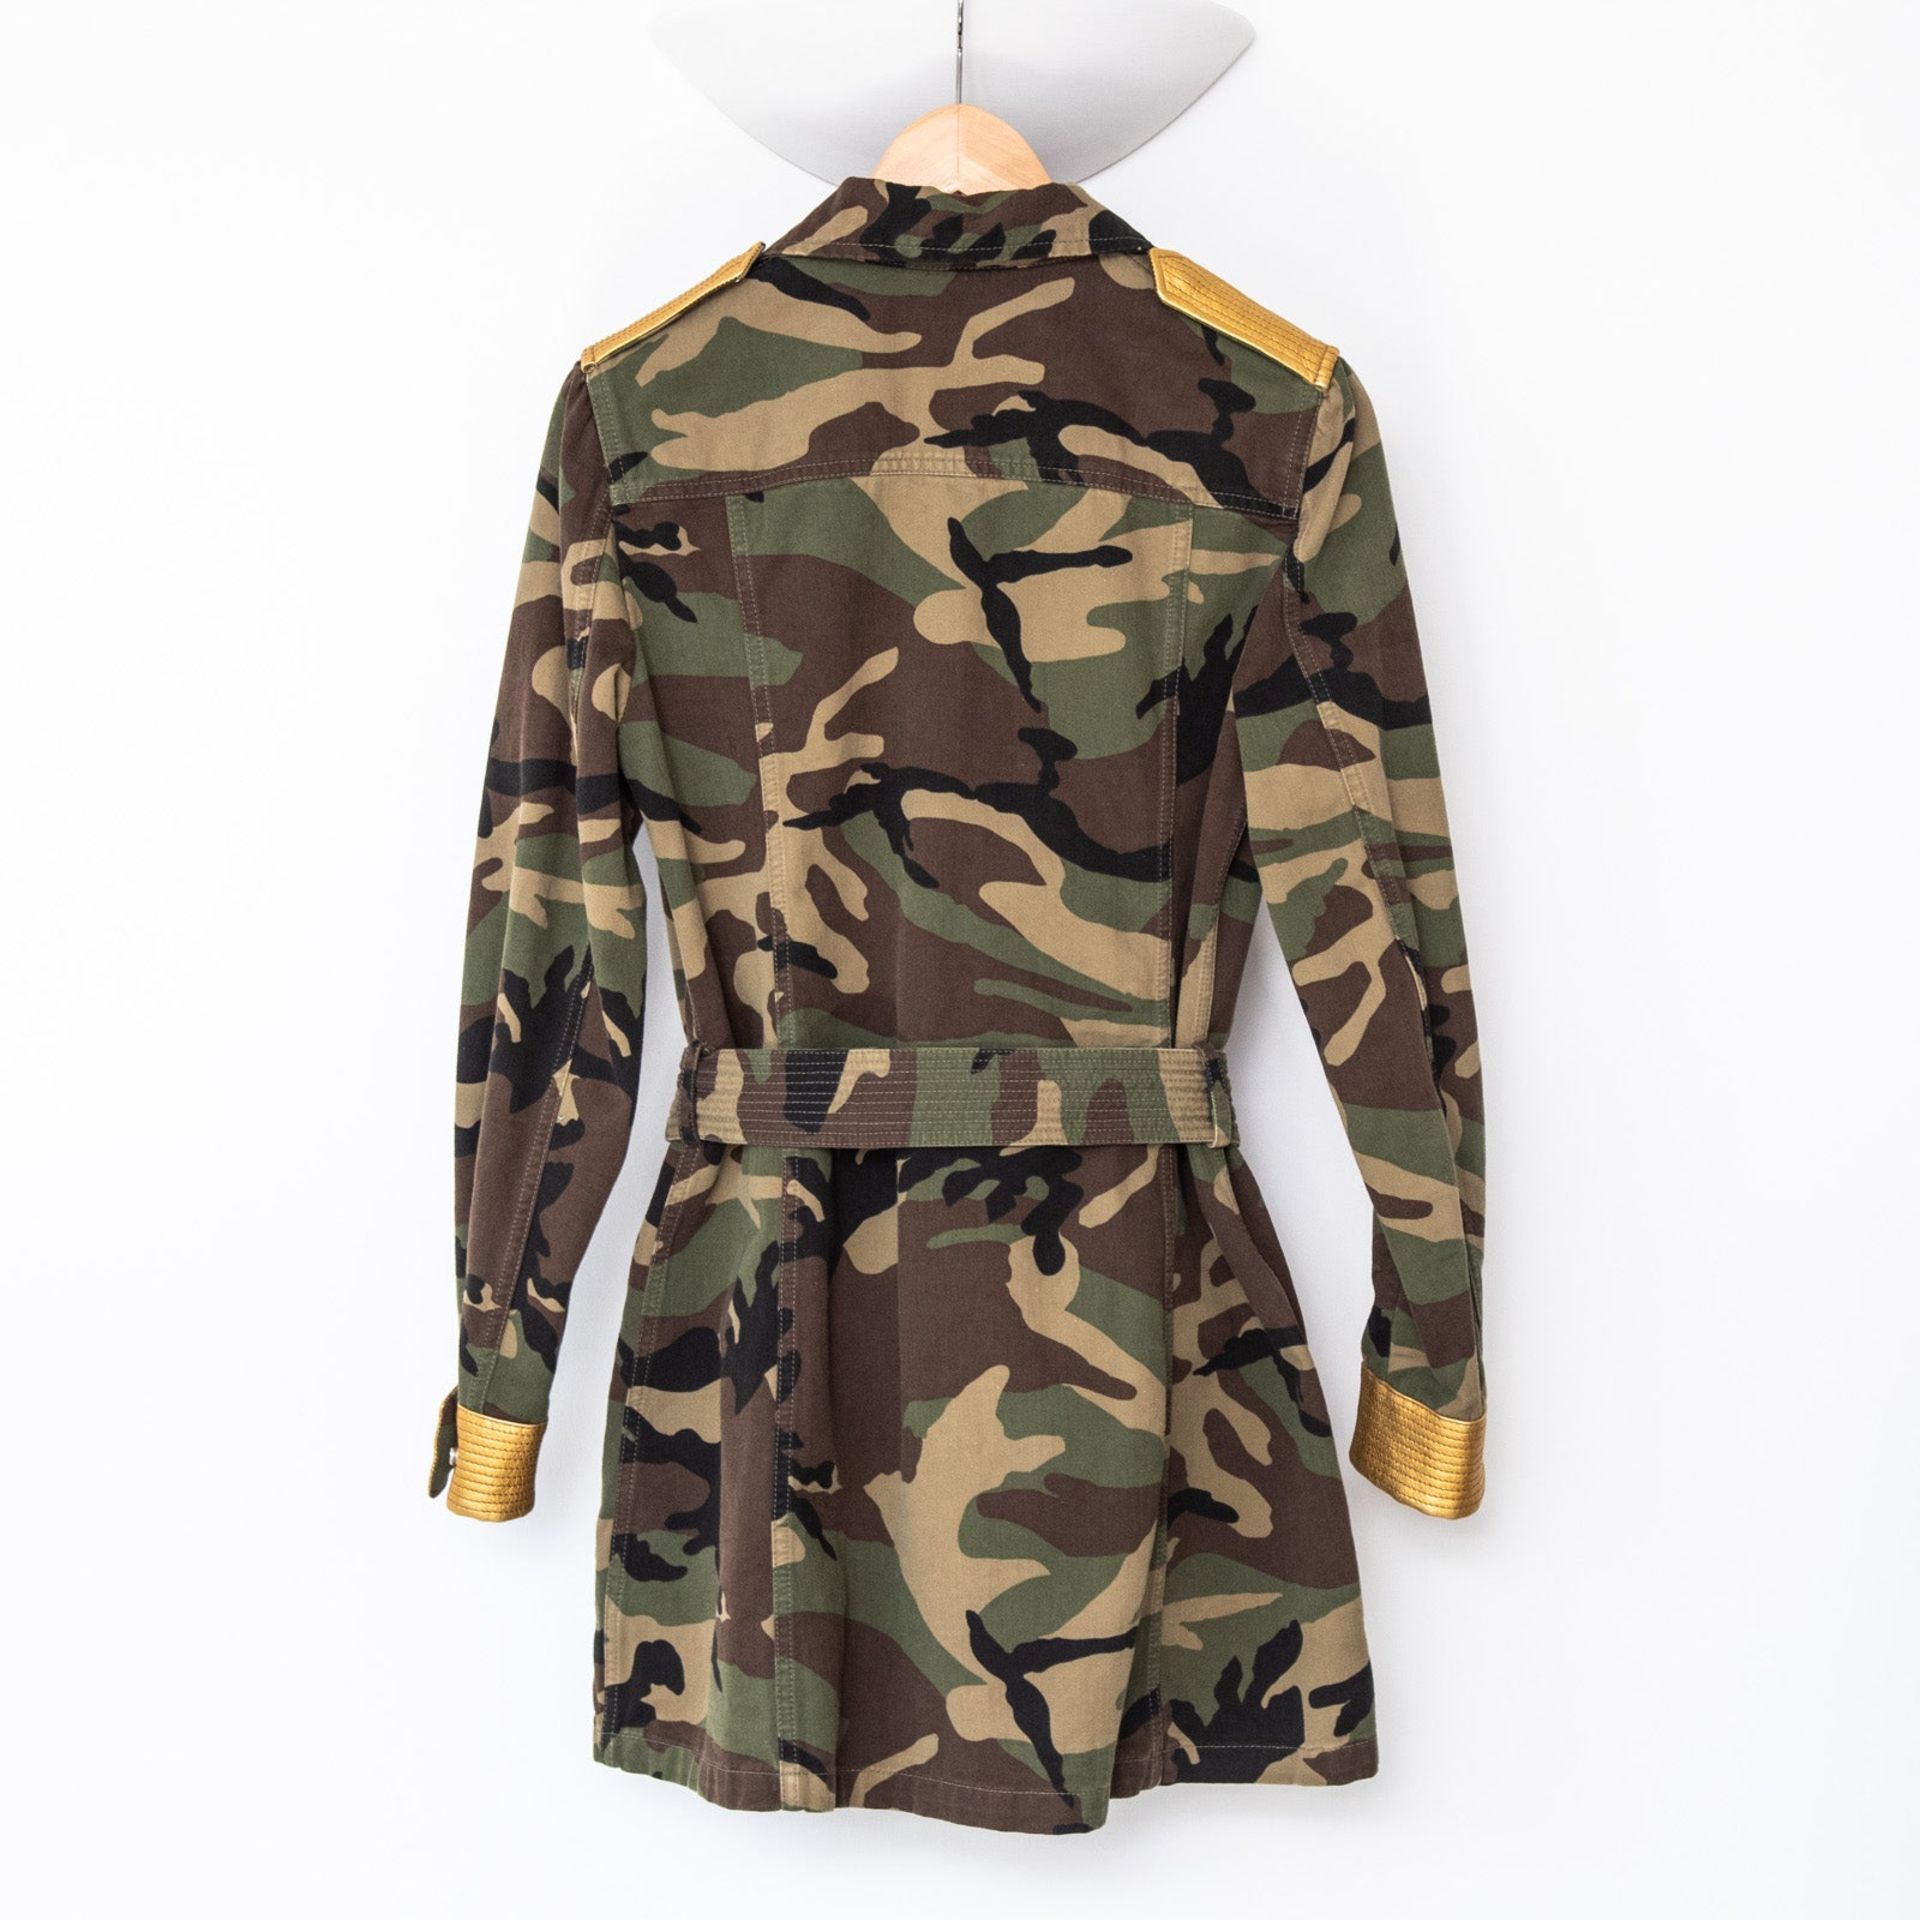 Saint Laurent Camouflage Safari Jacket - Image 2 of 4